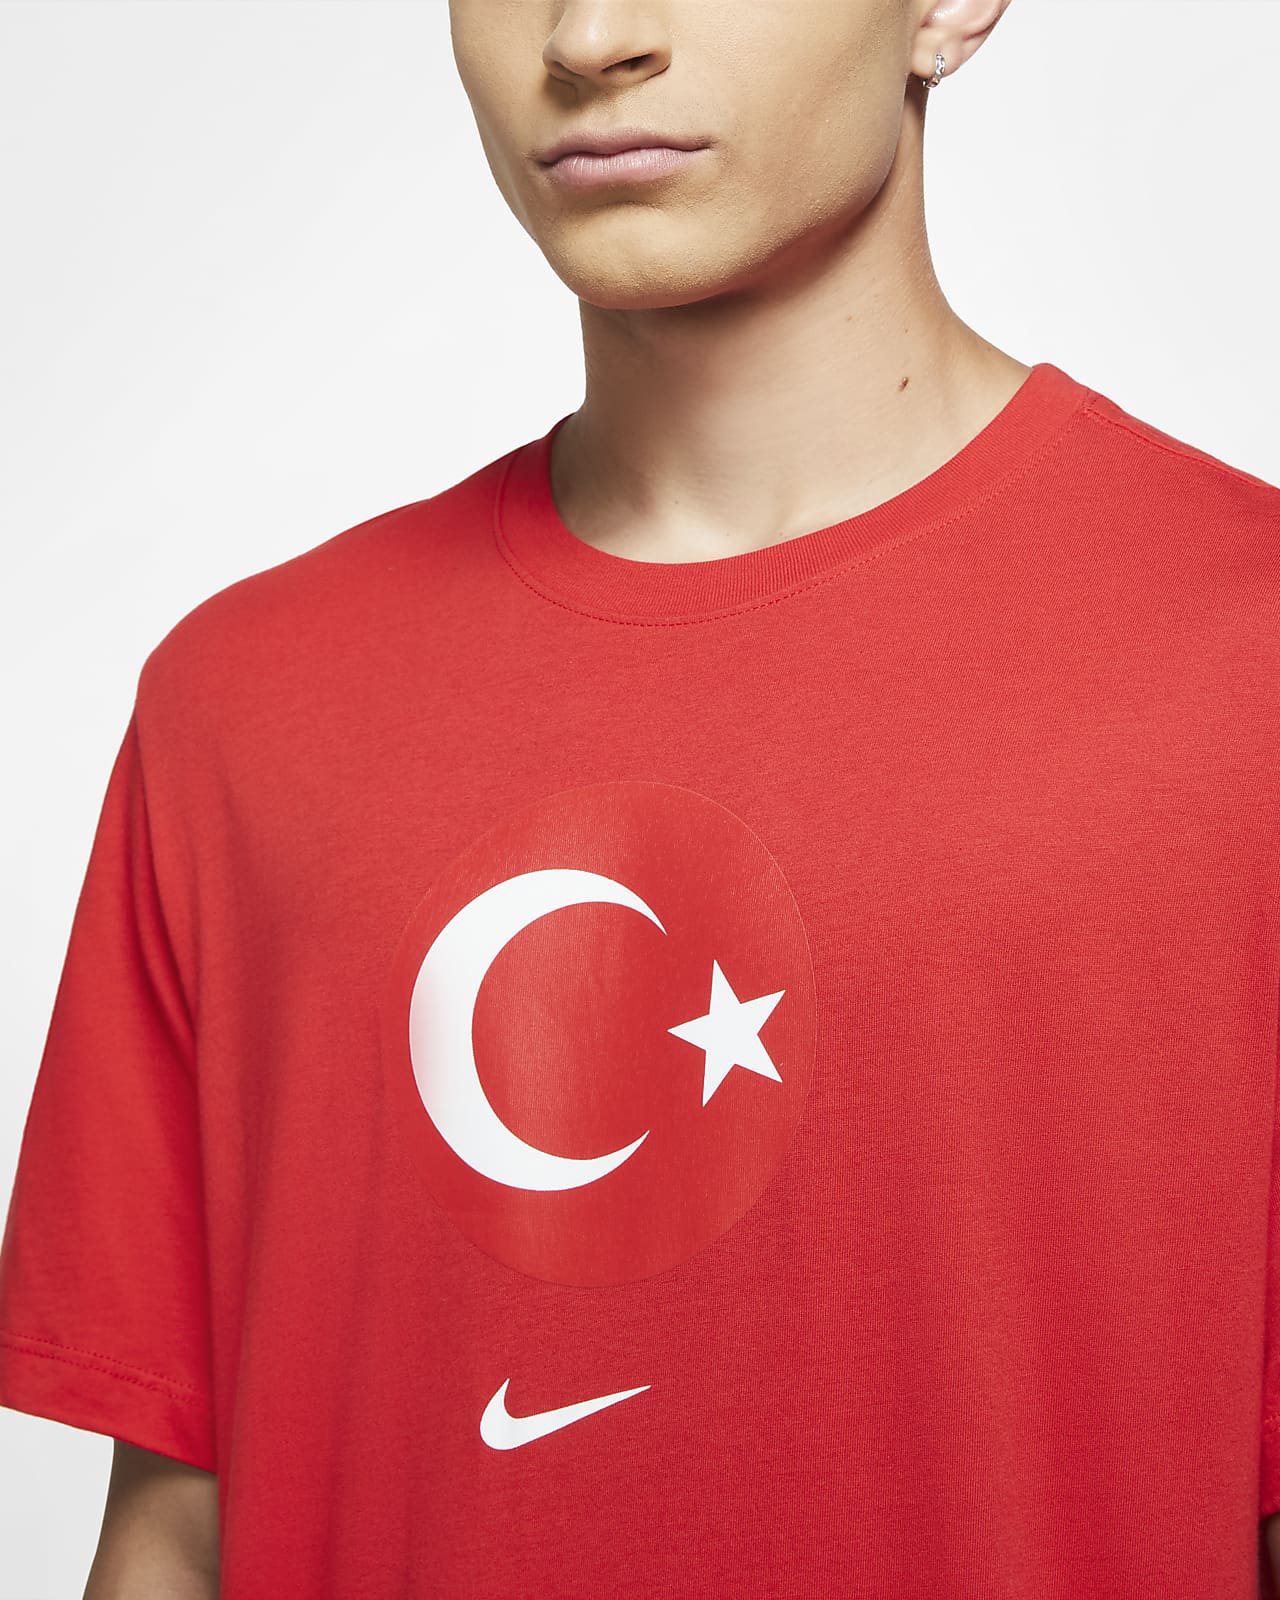 Nike Turkey футболка. Найк Турция. Nike в Турции. T Shirt Turkey. Найк турция сайт